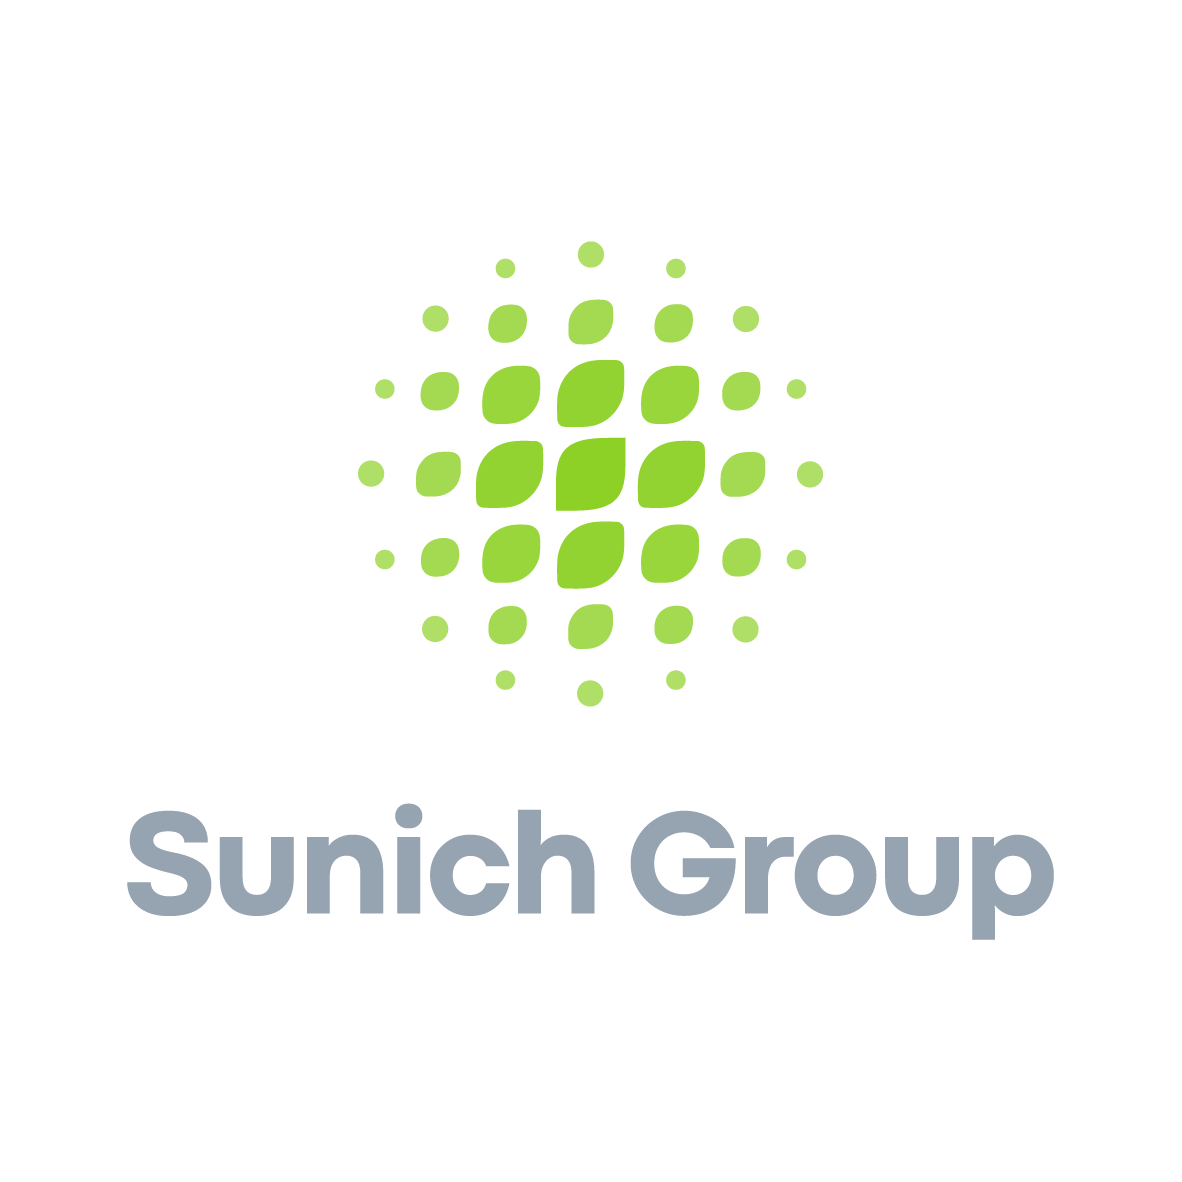 مسئول امور اداری | Administrative Officer - گروه شرکت های سن ایچ | Sunich Group Of Companies